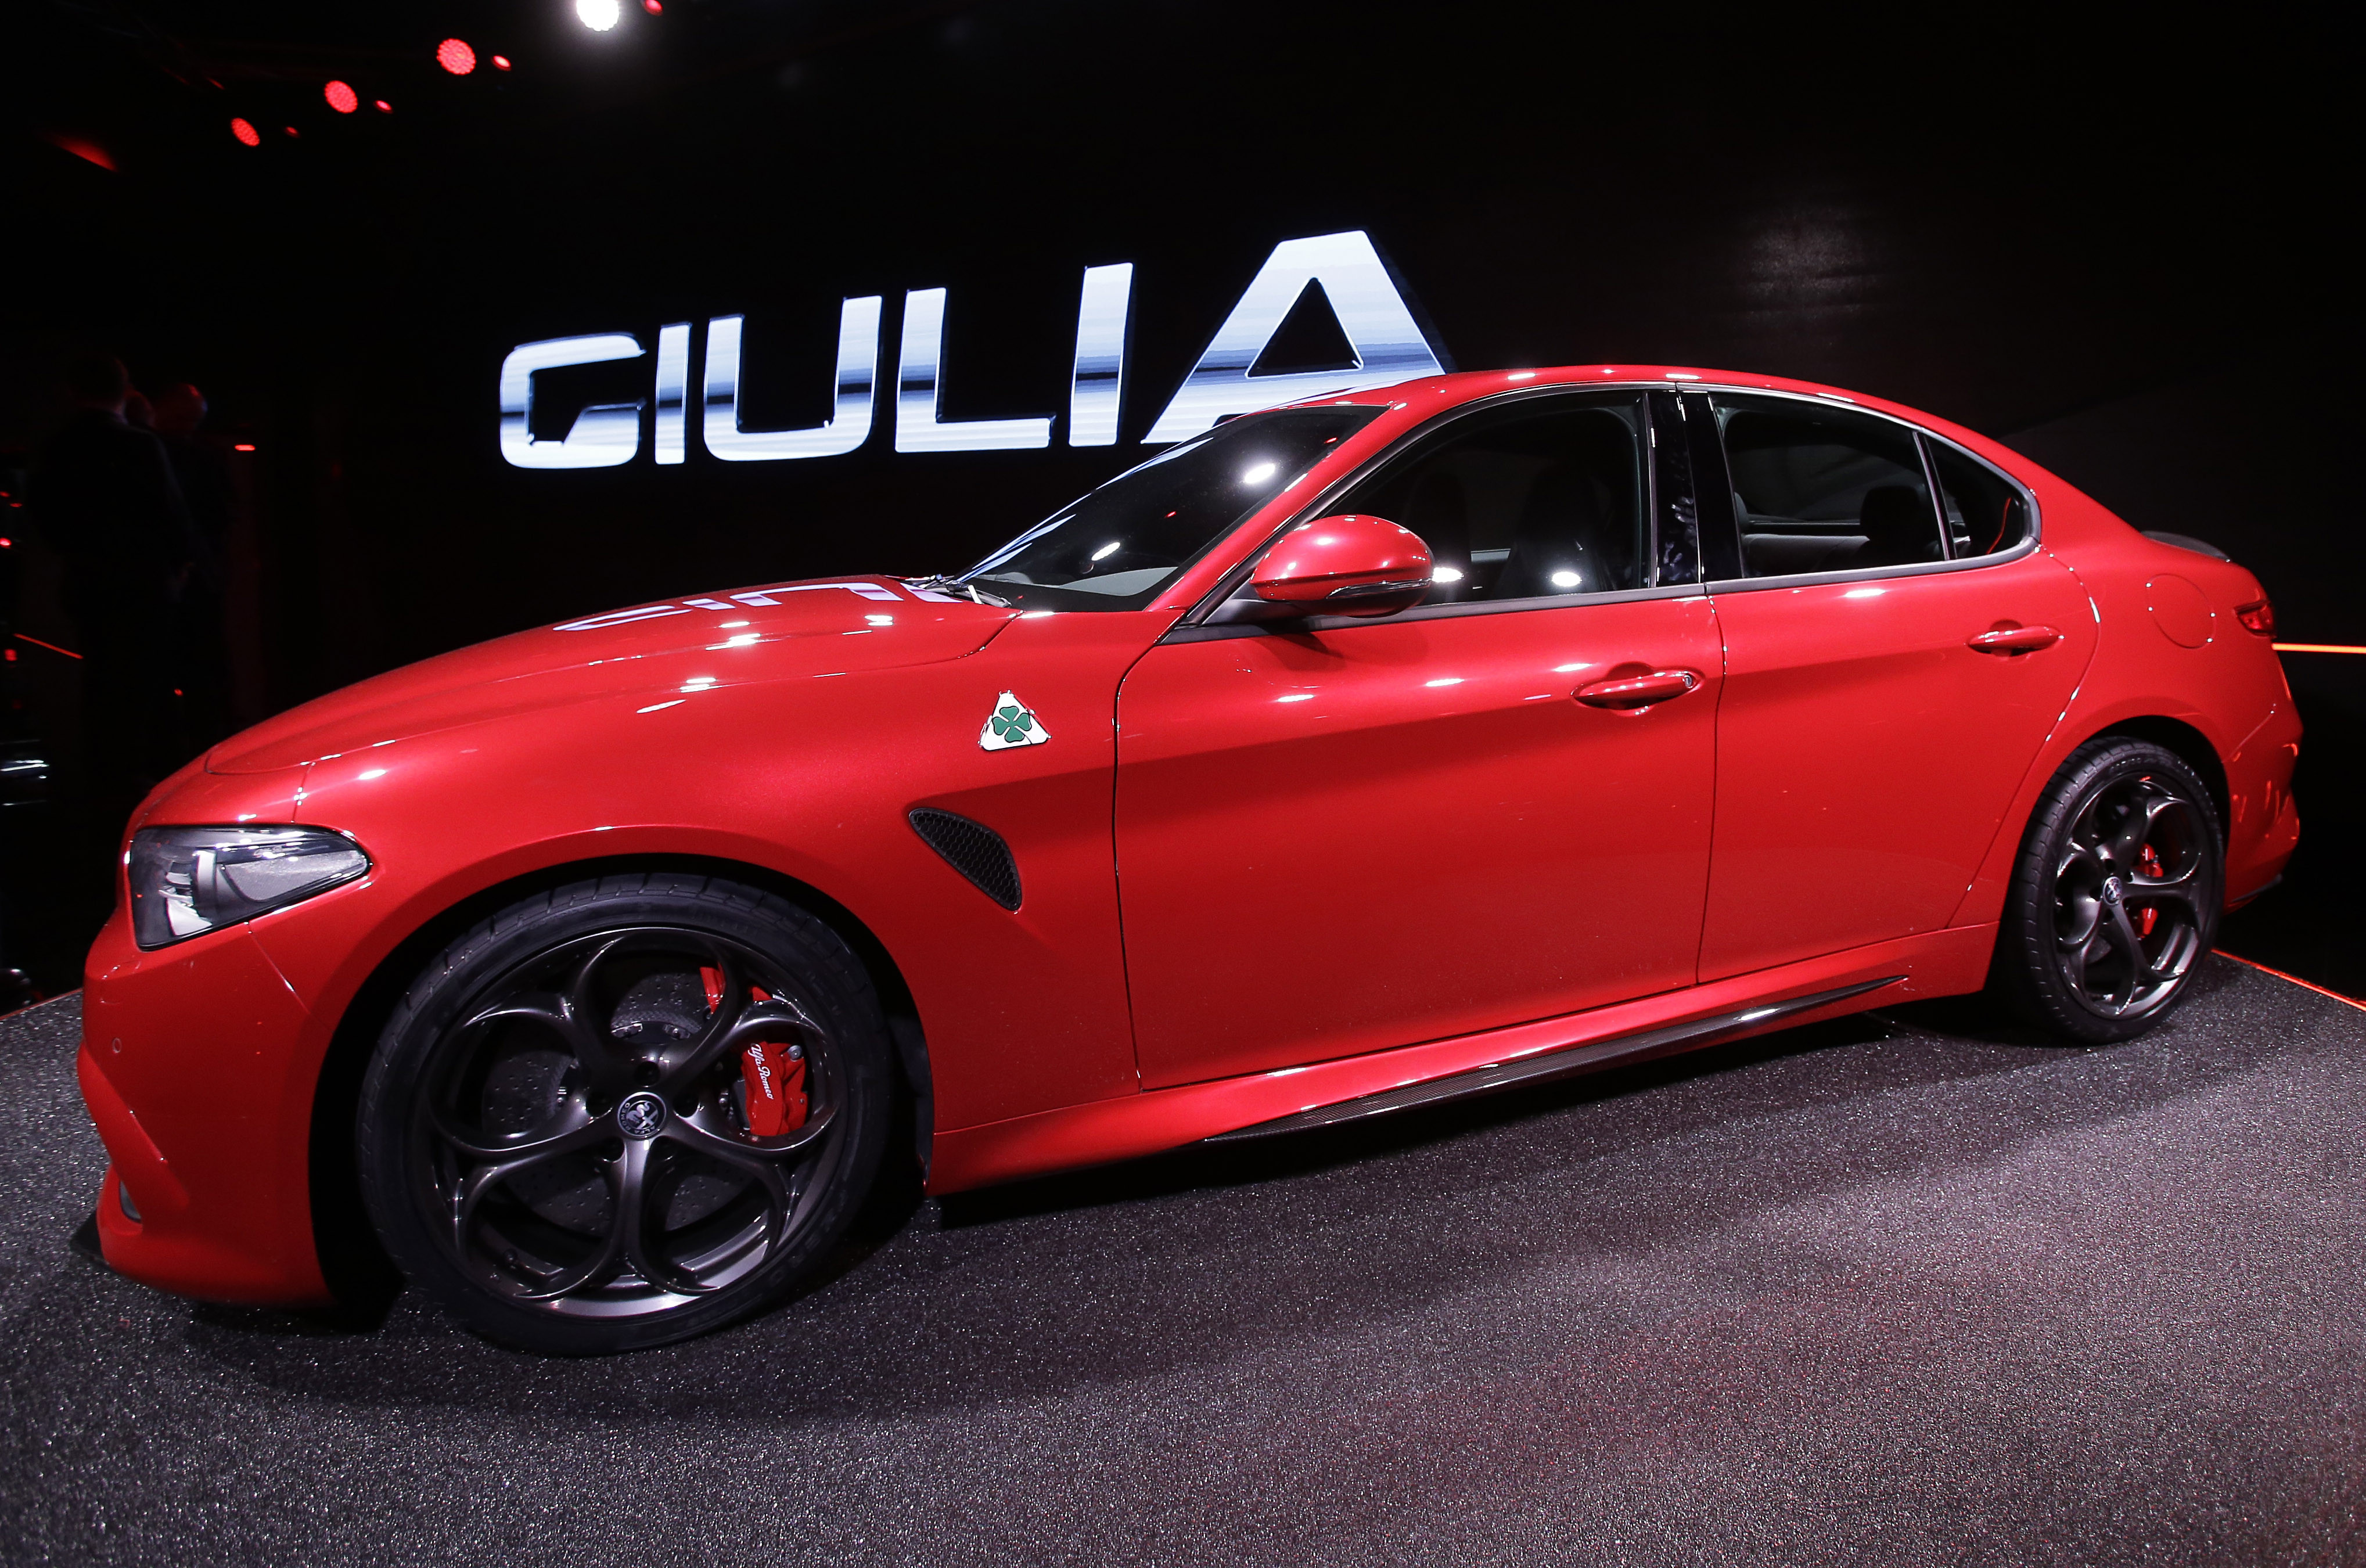 The new Alfa Romeo Giulia sedan is shown during the official presentation, in Arese, near Milan, Italy. (Antonio Calanni&mdash;AP)